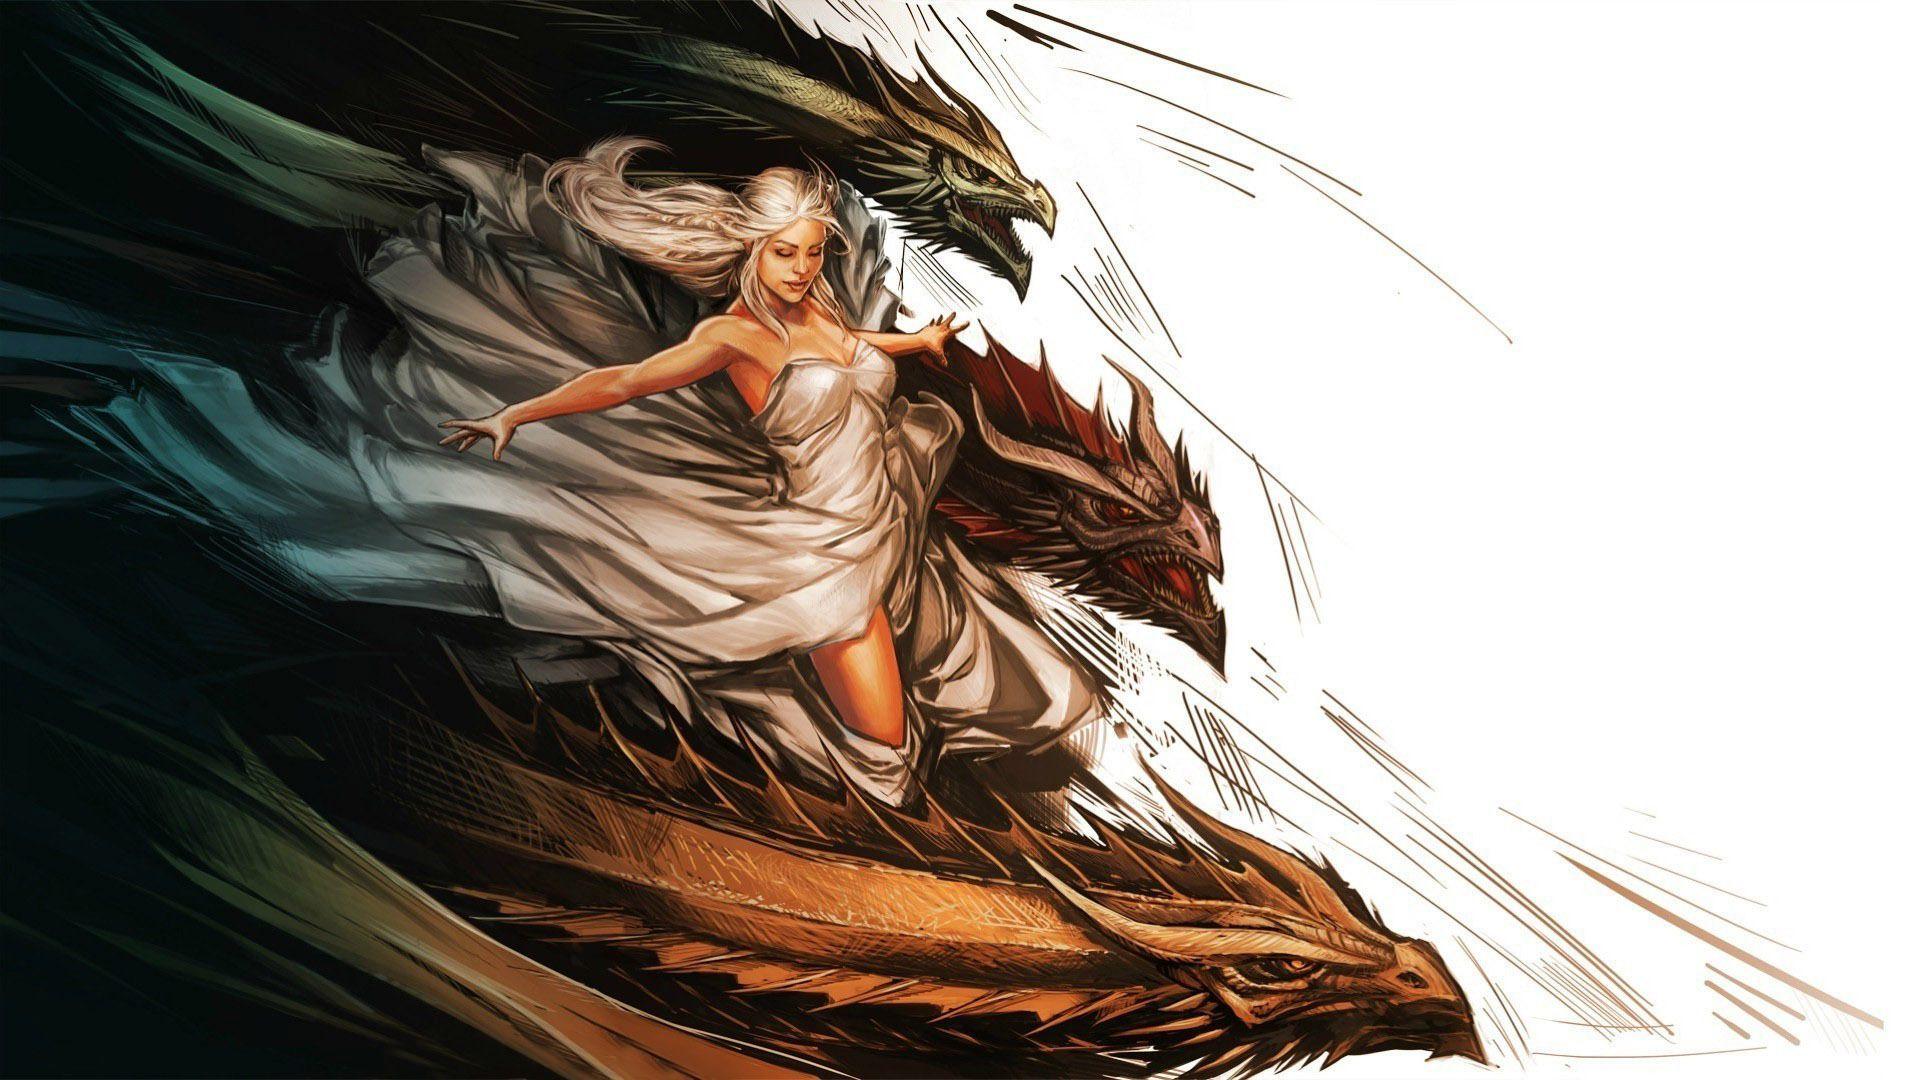 Daenerys Targaryen and her dragons Wallpaper. Dragon illustration